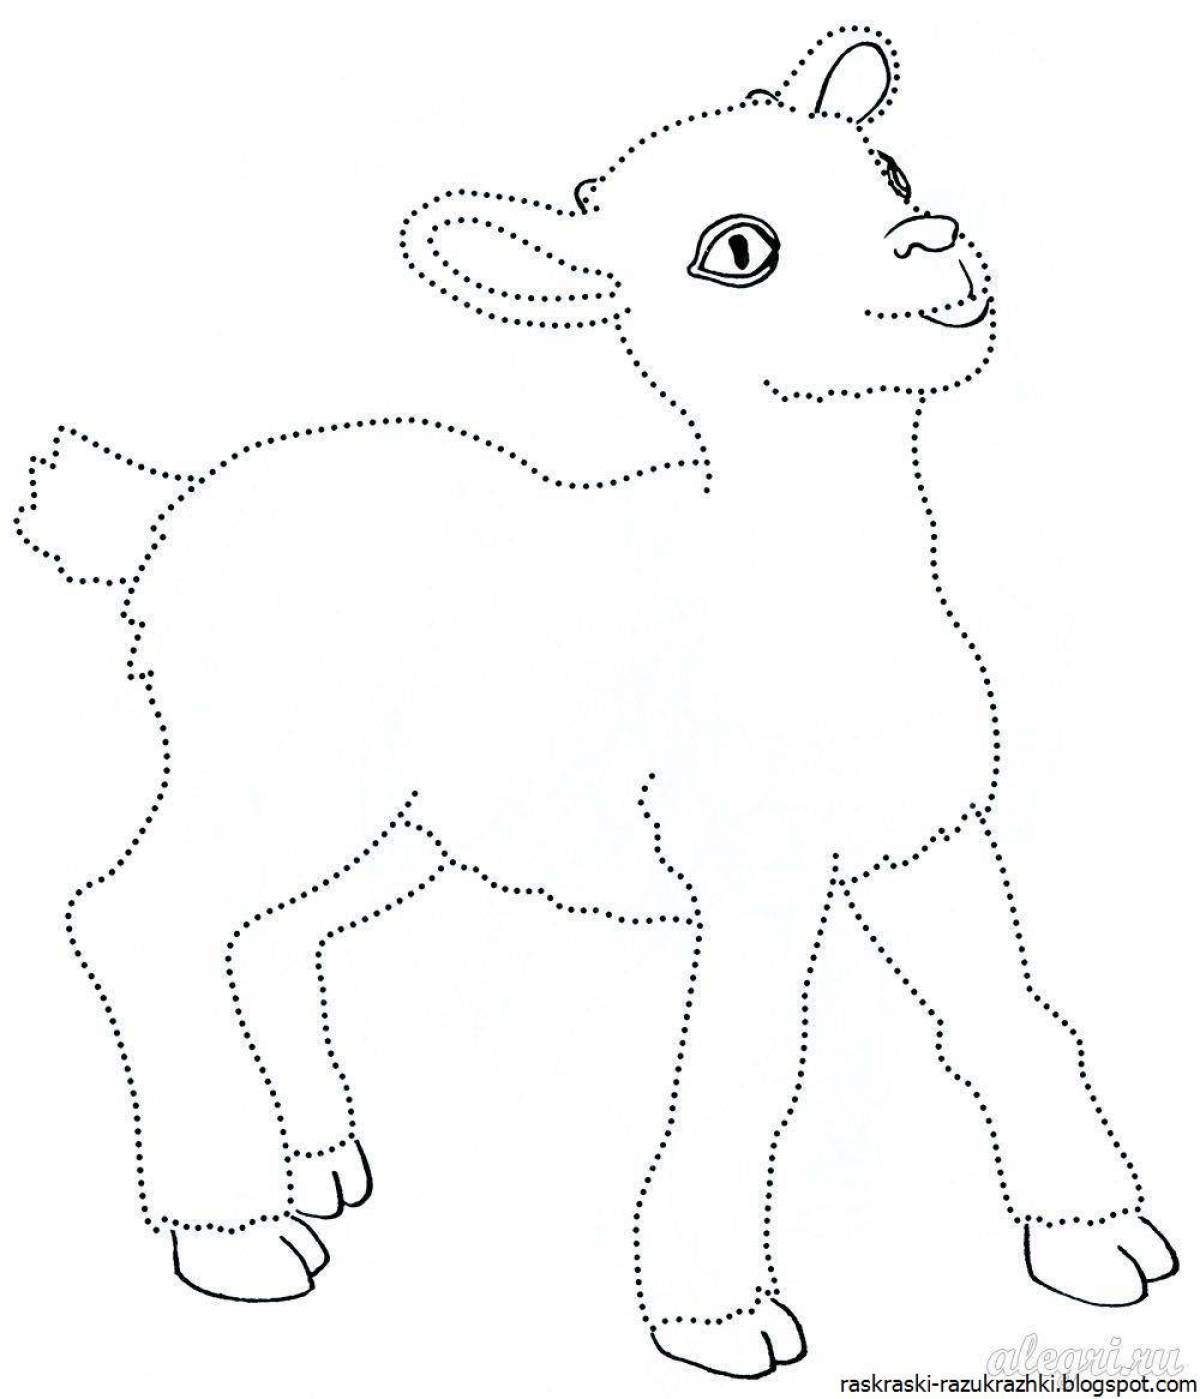 Goat #22